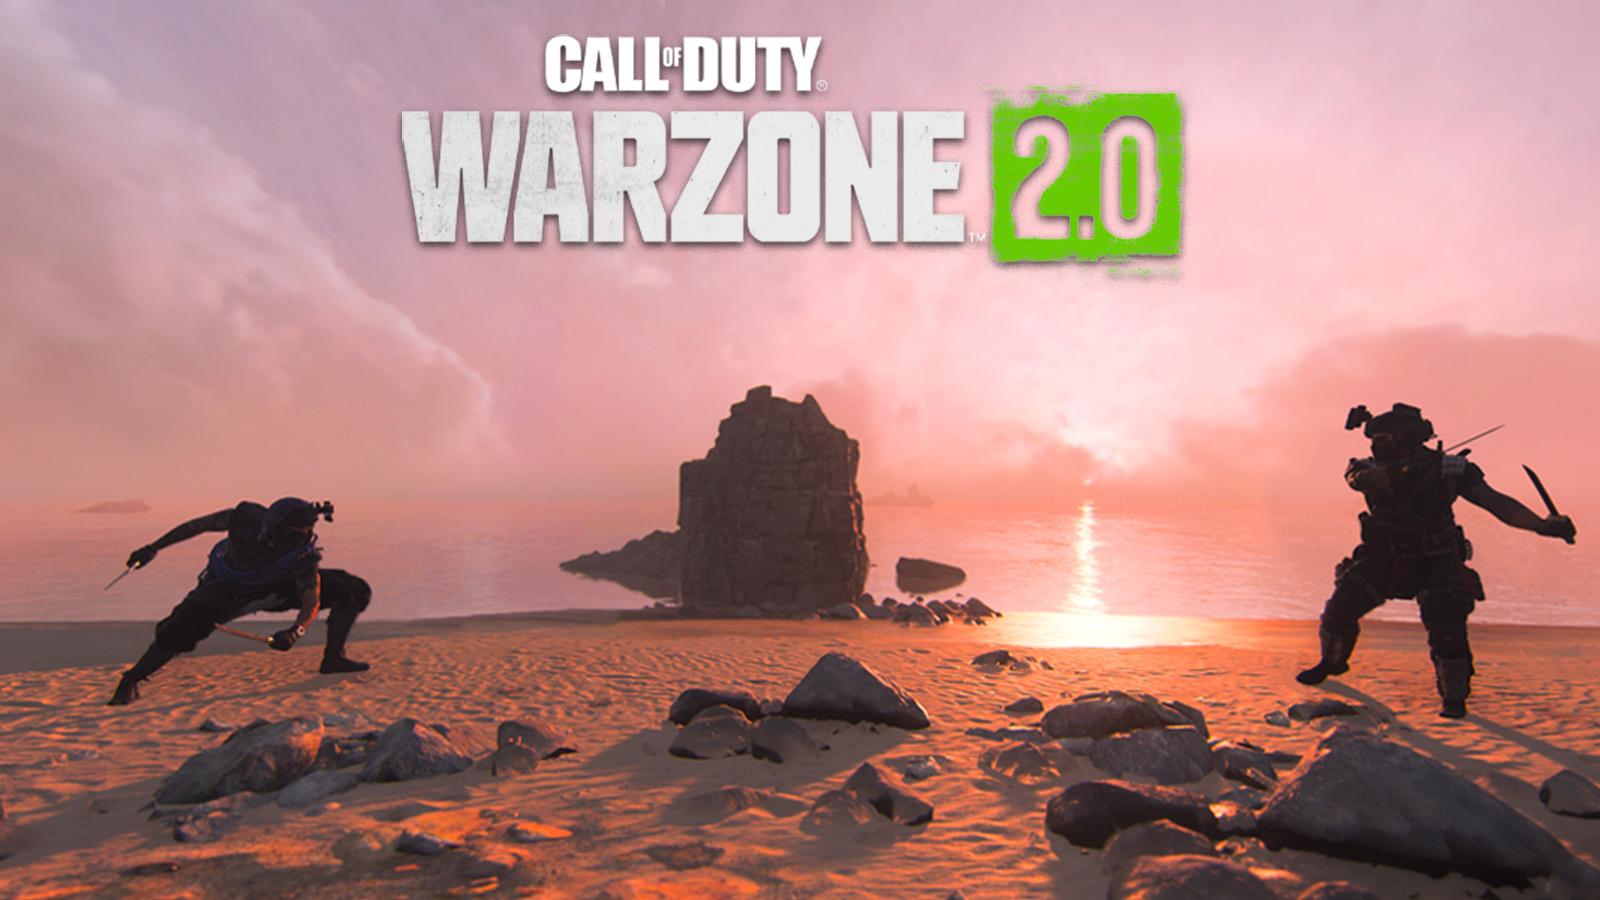 CoD Modern Warfare 2 and Warzone 2 Season 3 start date and content